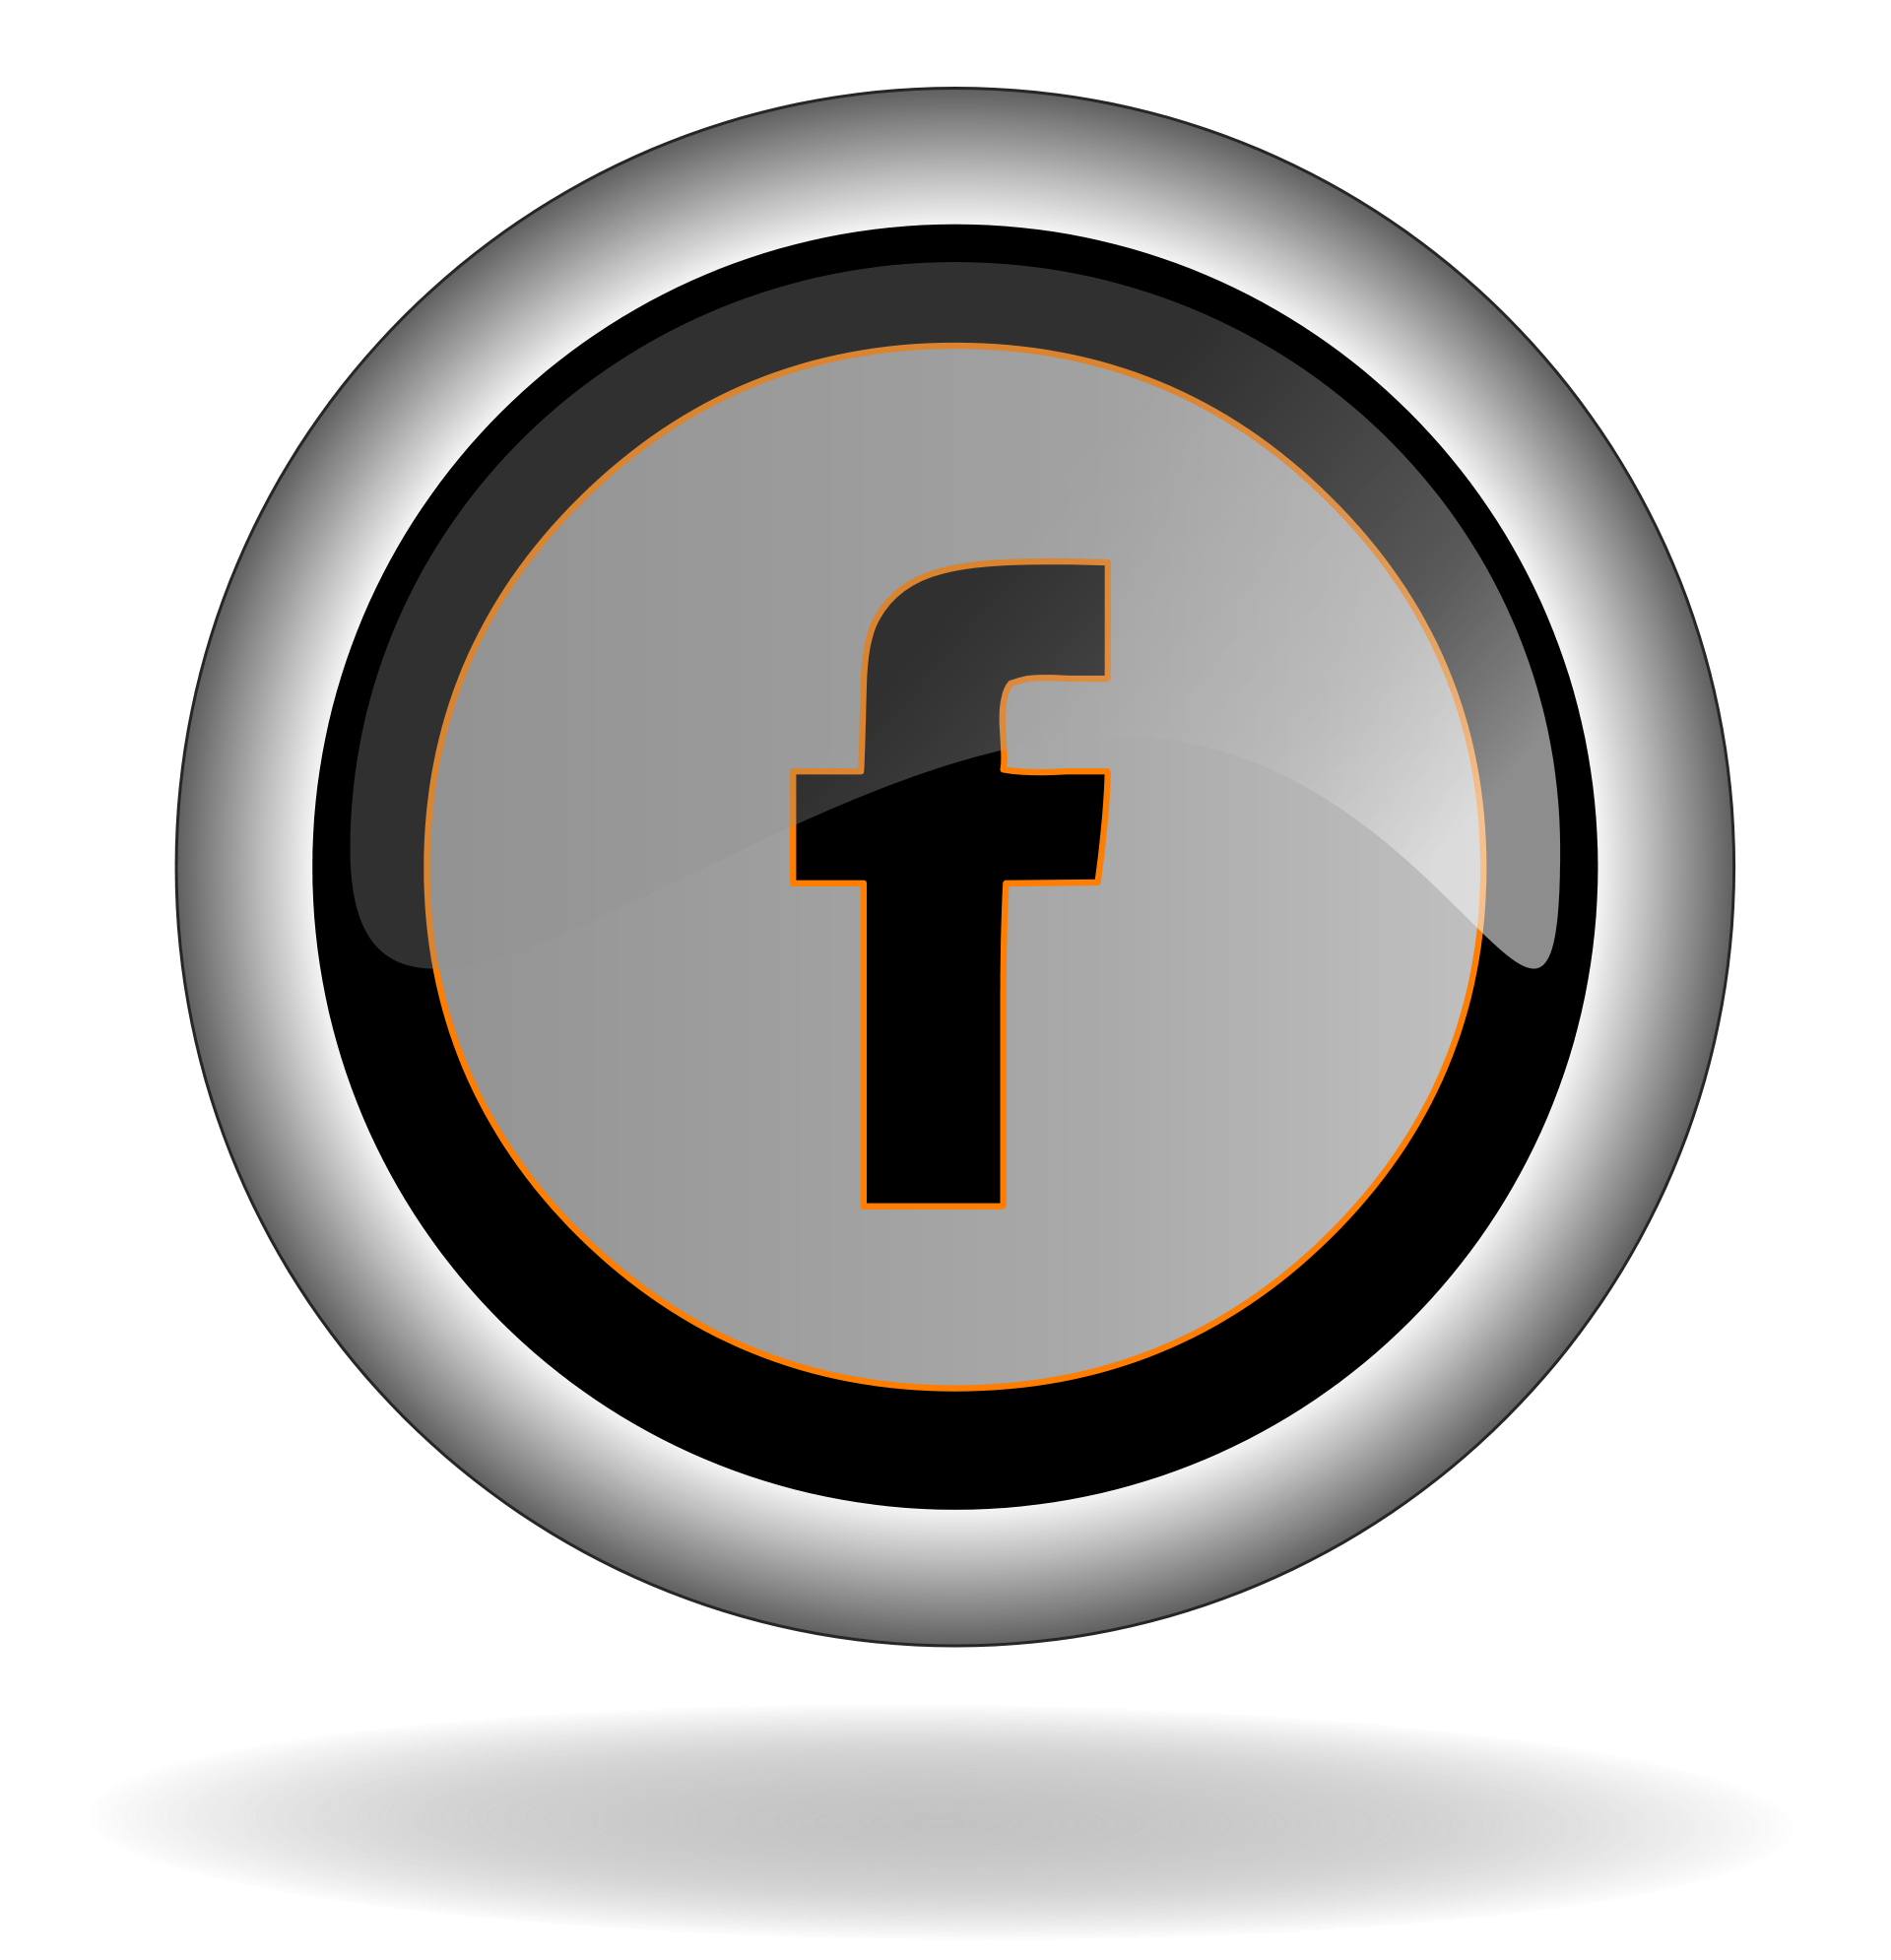 Icono de logo de Facebook